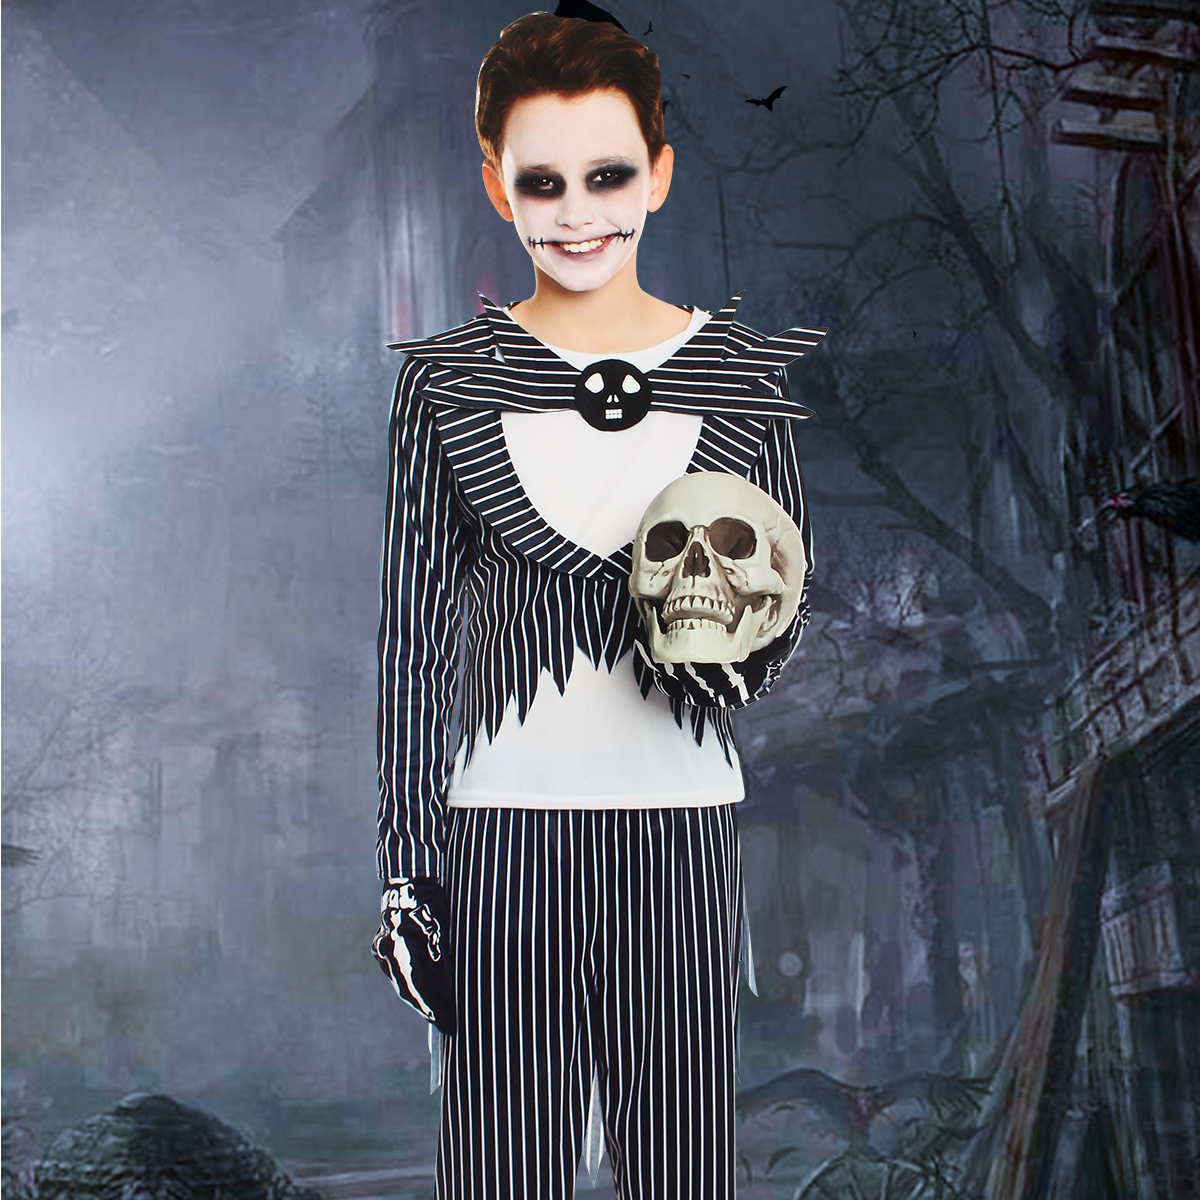 Boys Cosplay TV & Movie Suits Halloween Fright Night Skeleton Jack Costume